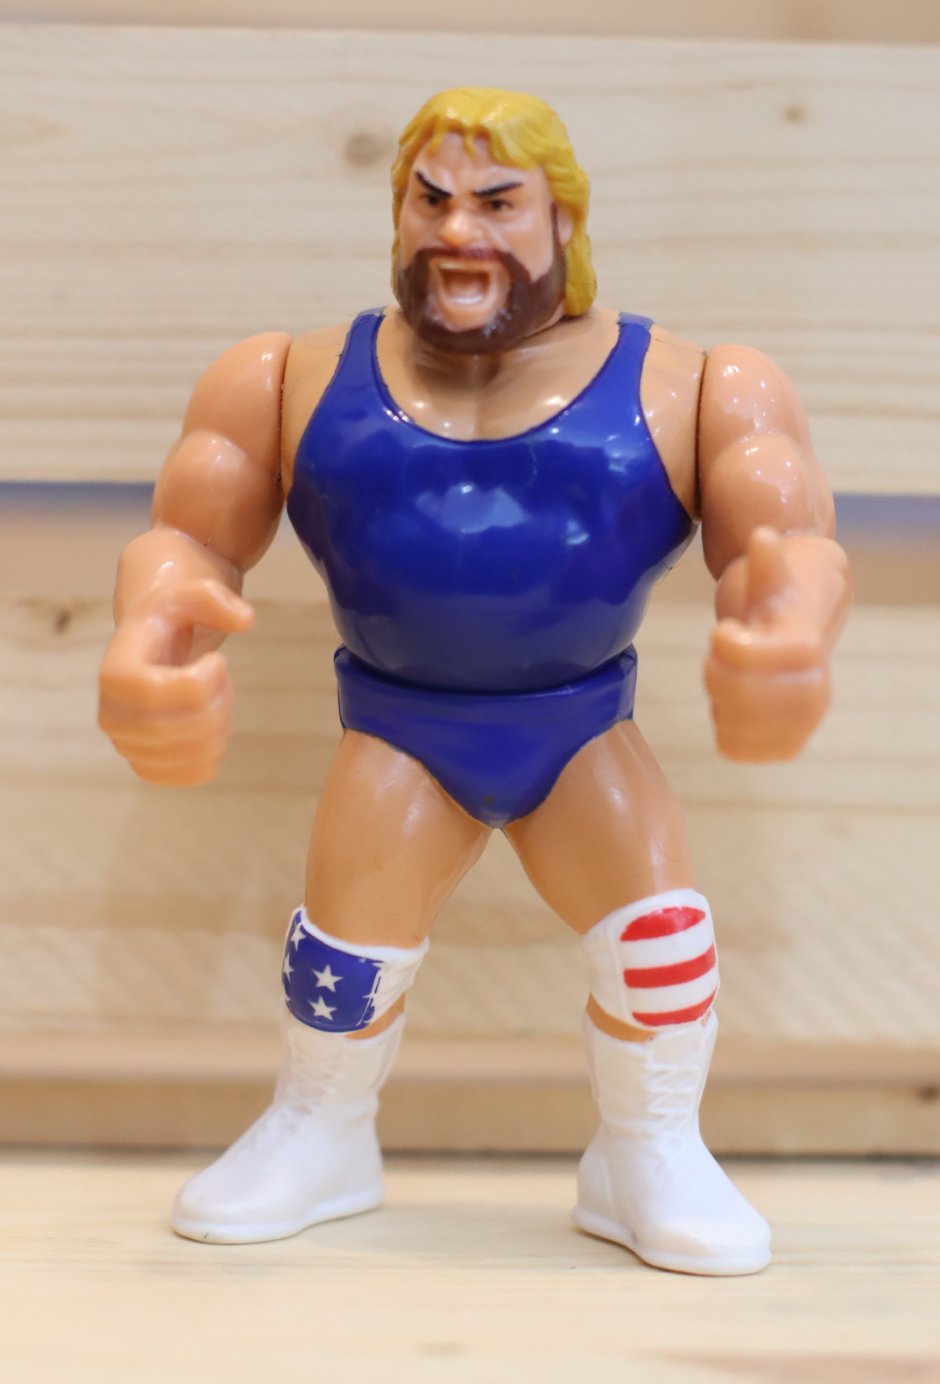 1993 Hasbro Hacksaw Jim Duggan WWF Loose Wrestling Figure Mint With American Flag